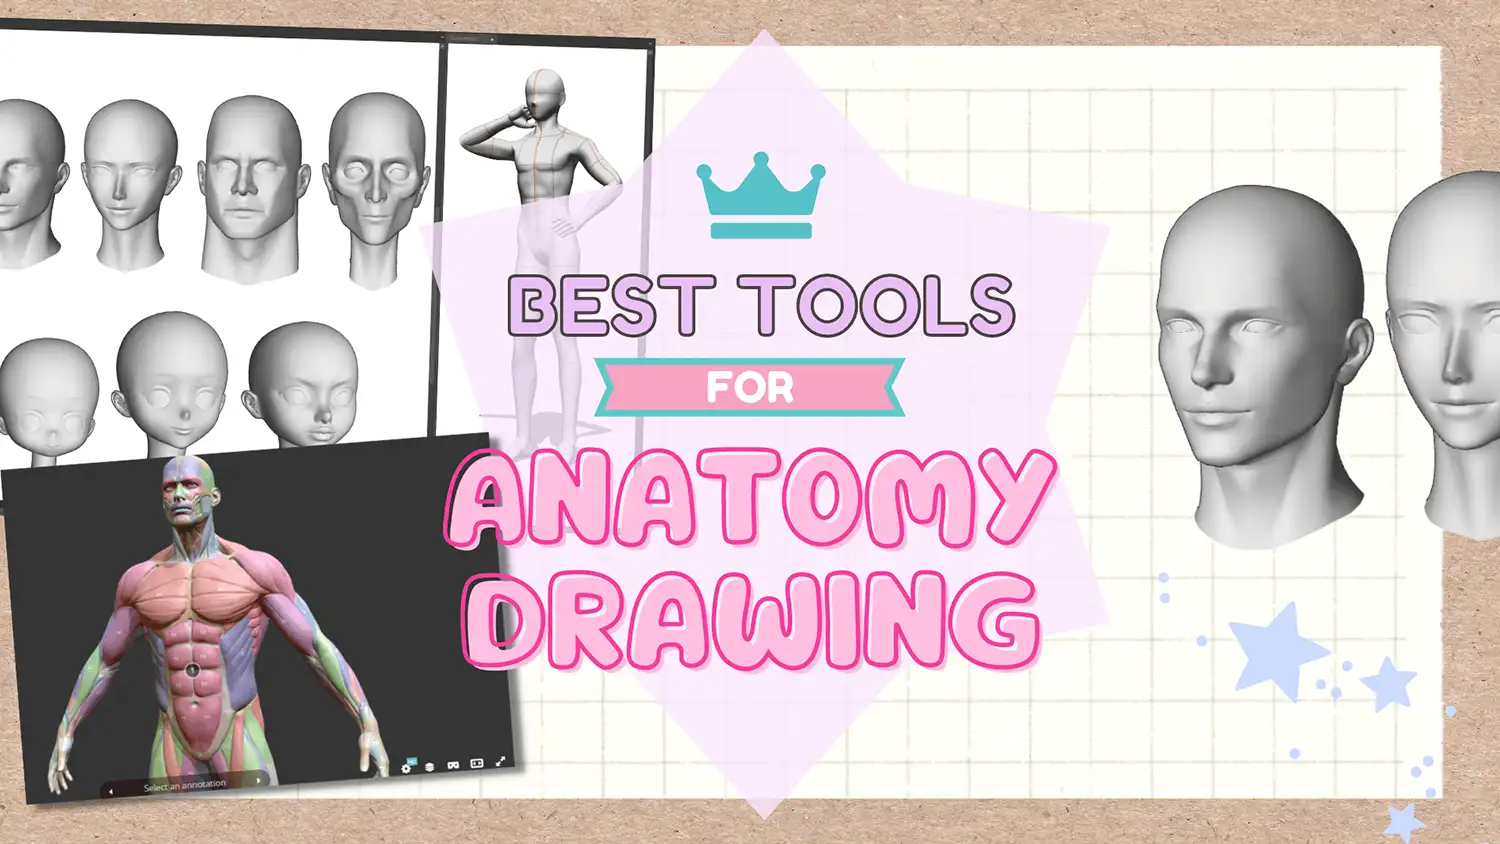 ArtStation - Practice of human body drawing